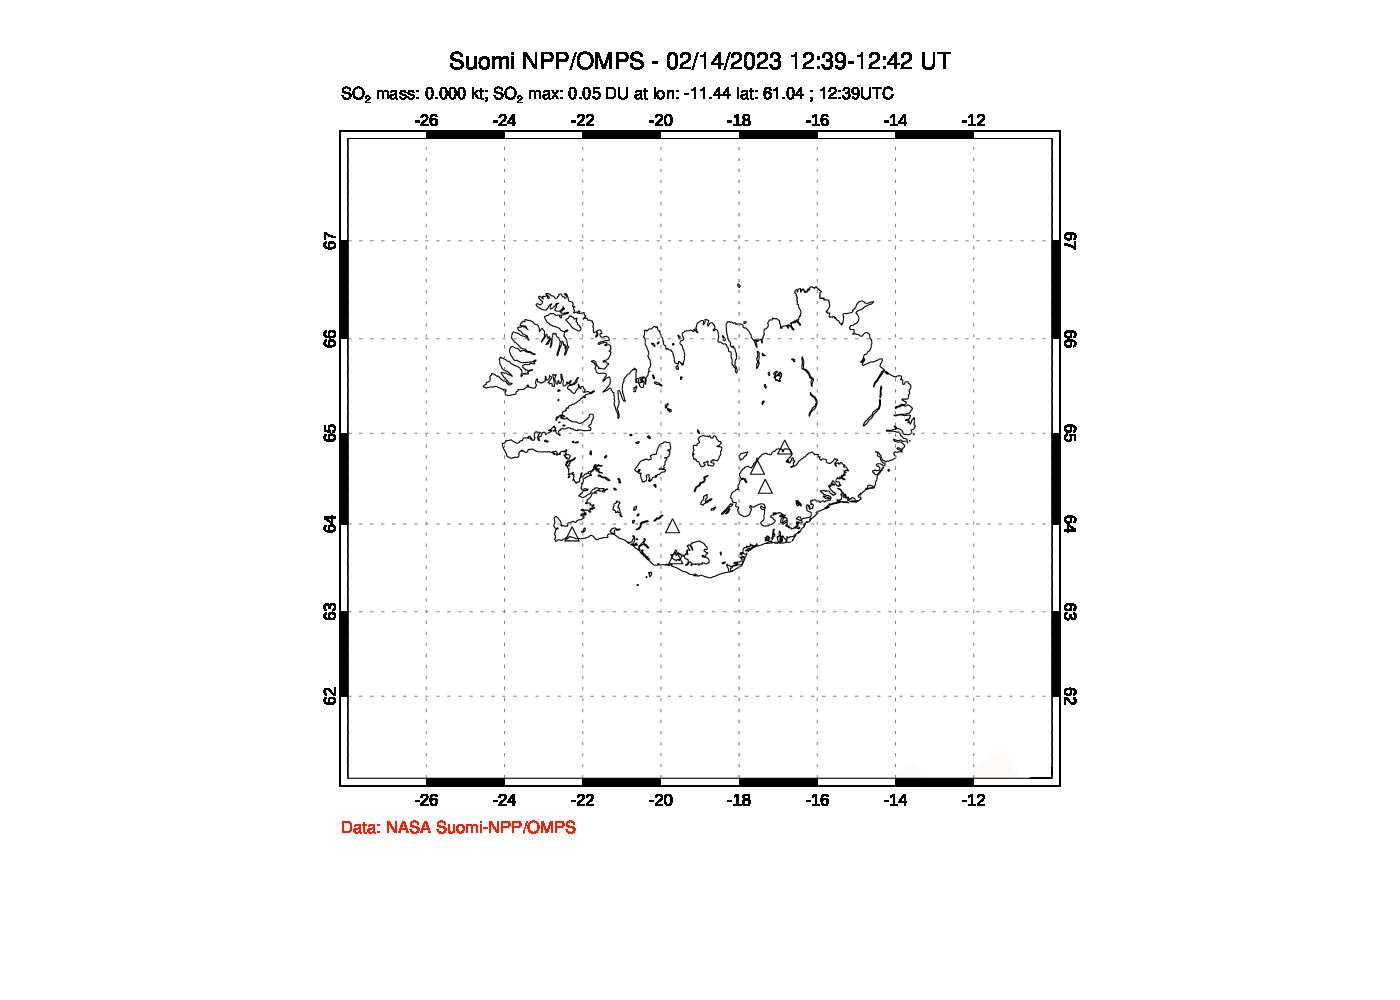 A sulfur dioxide image over Iceland on Feb 14, 2023.